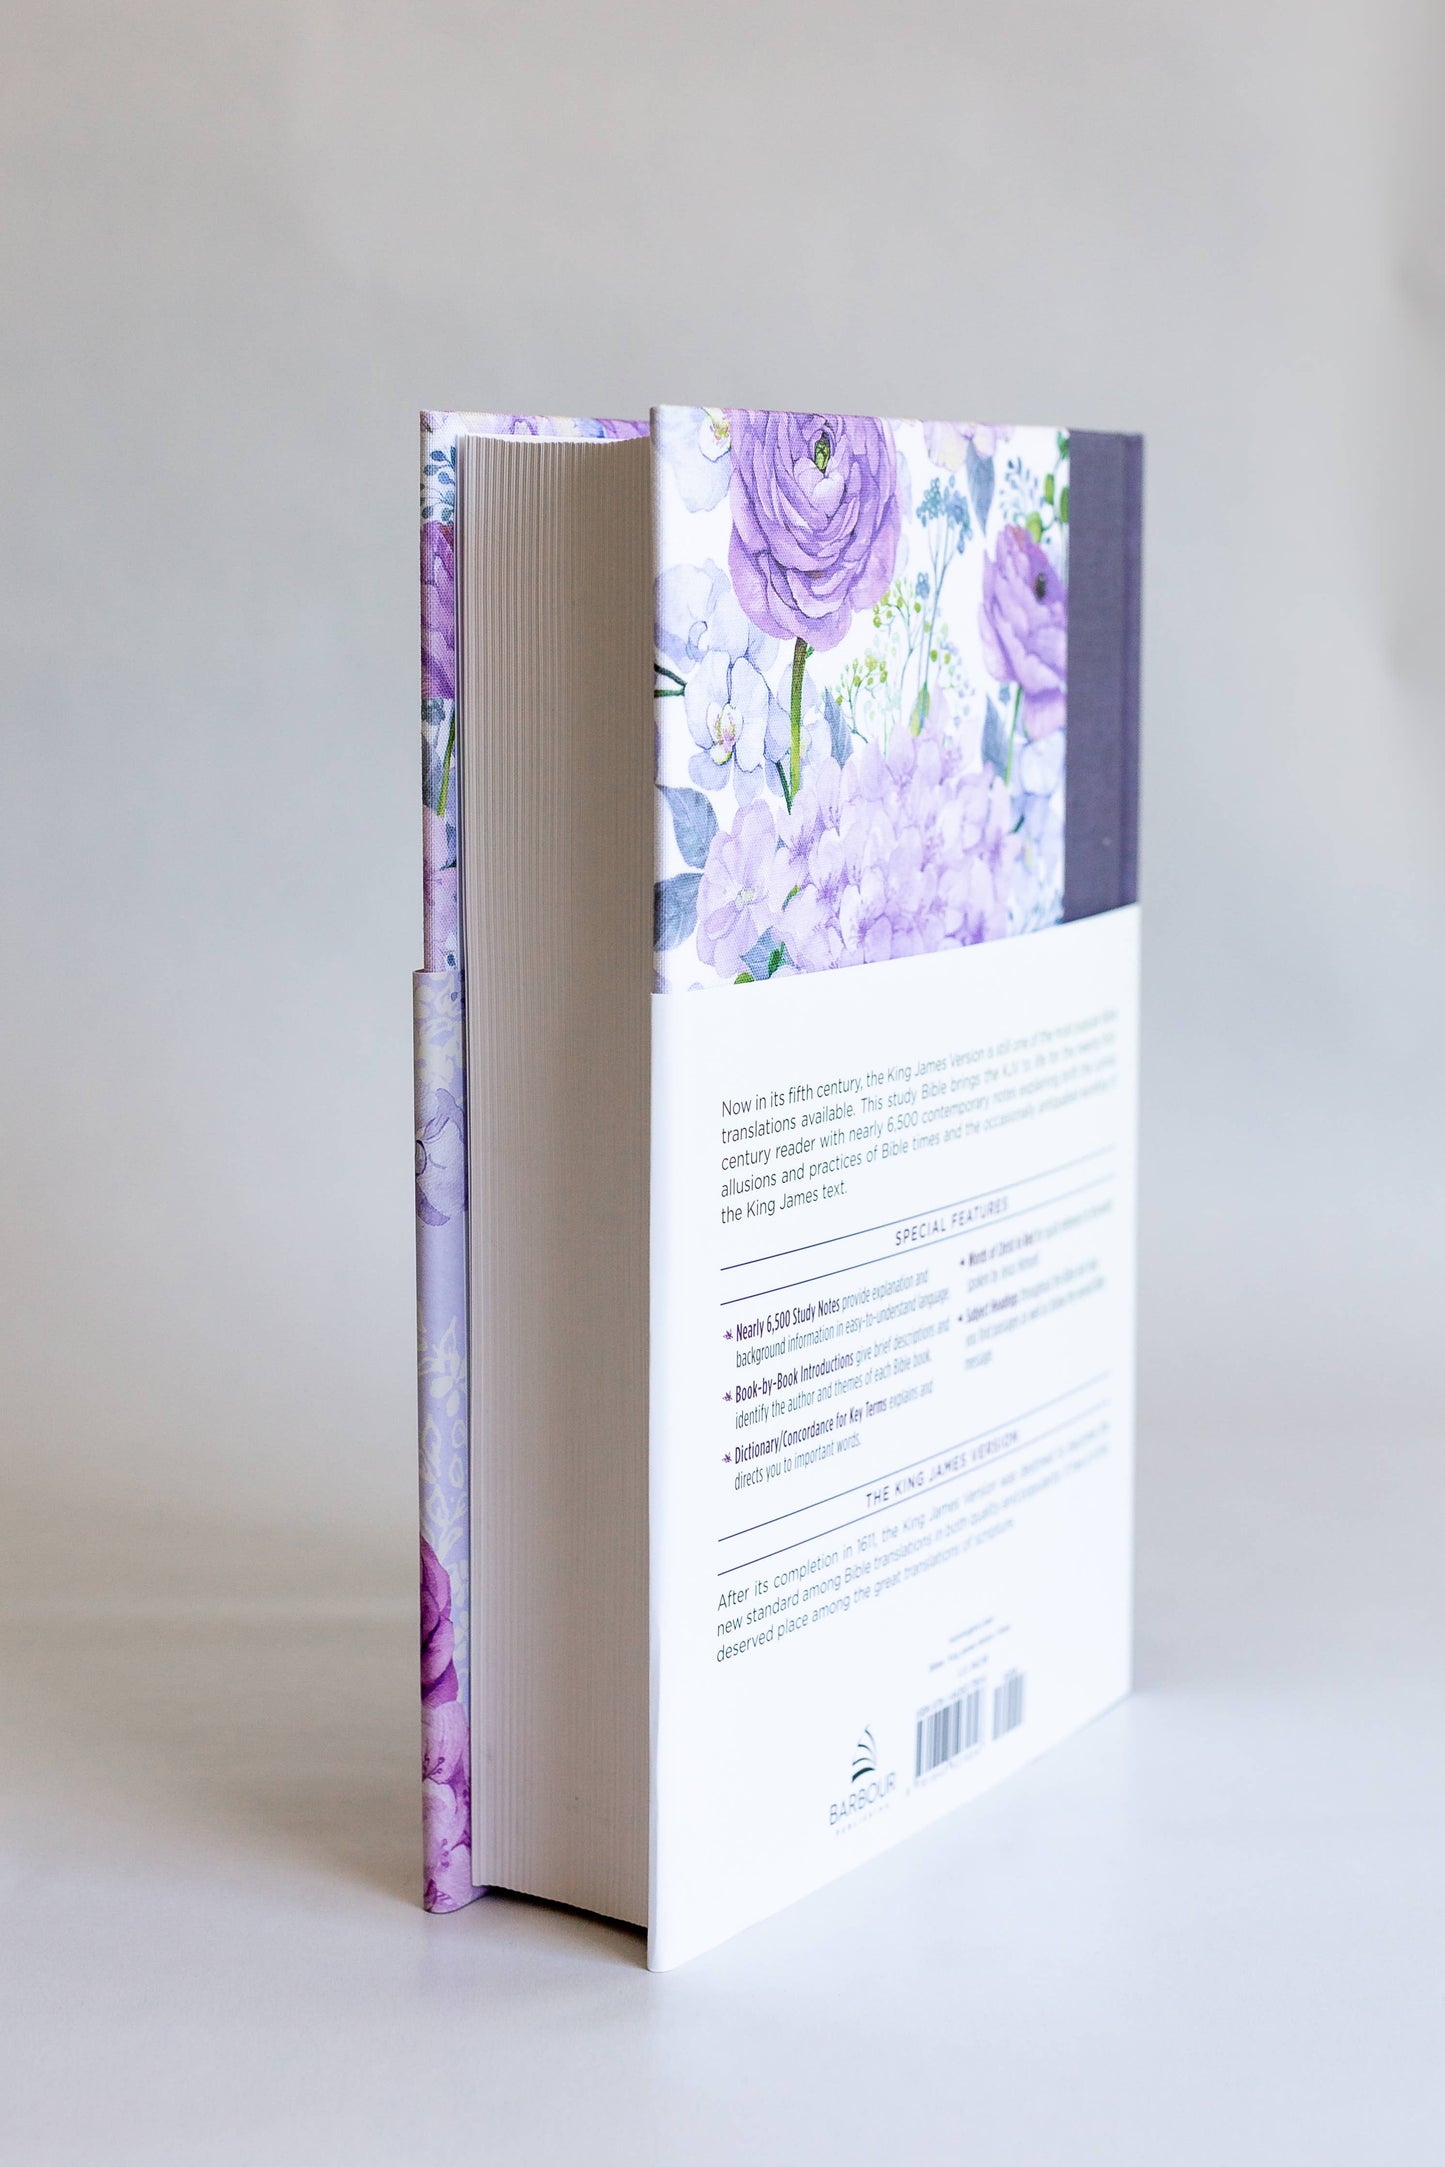 KJV Study Bible, Large Print [Hummingbird Lilacs]